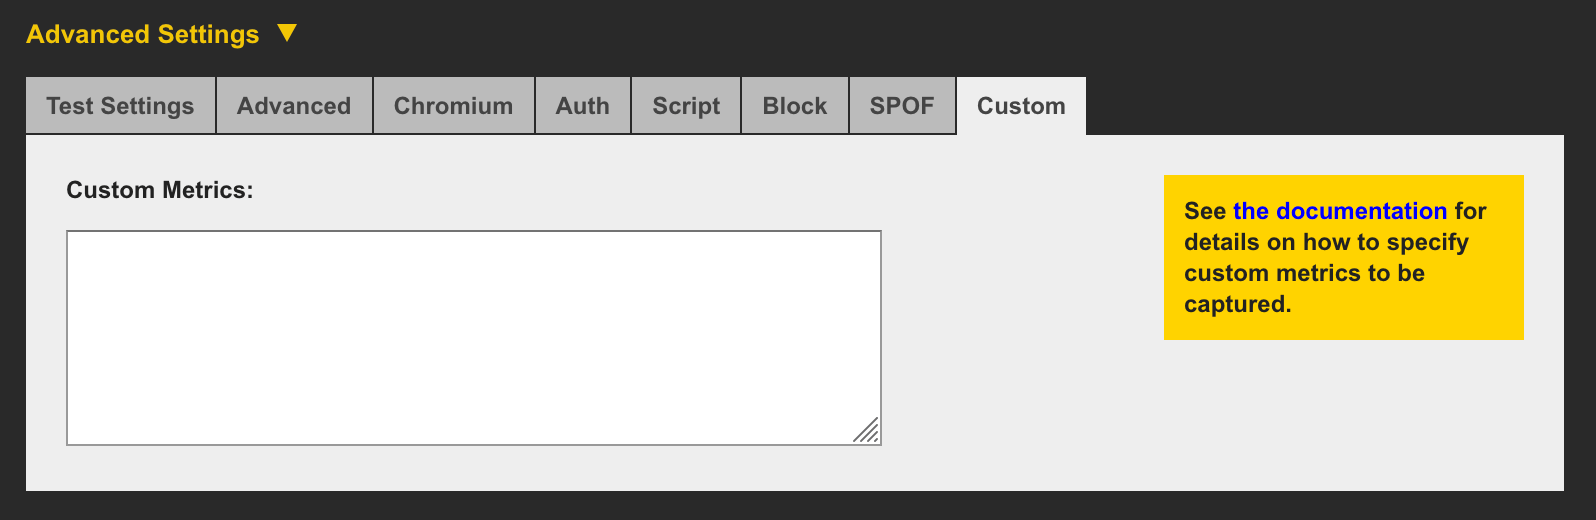 The custom tab consists of a single textarea for inputting JavaScript that will return custom metrics.